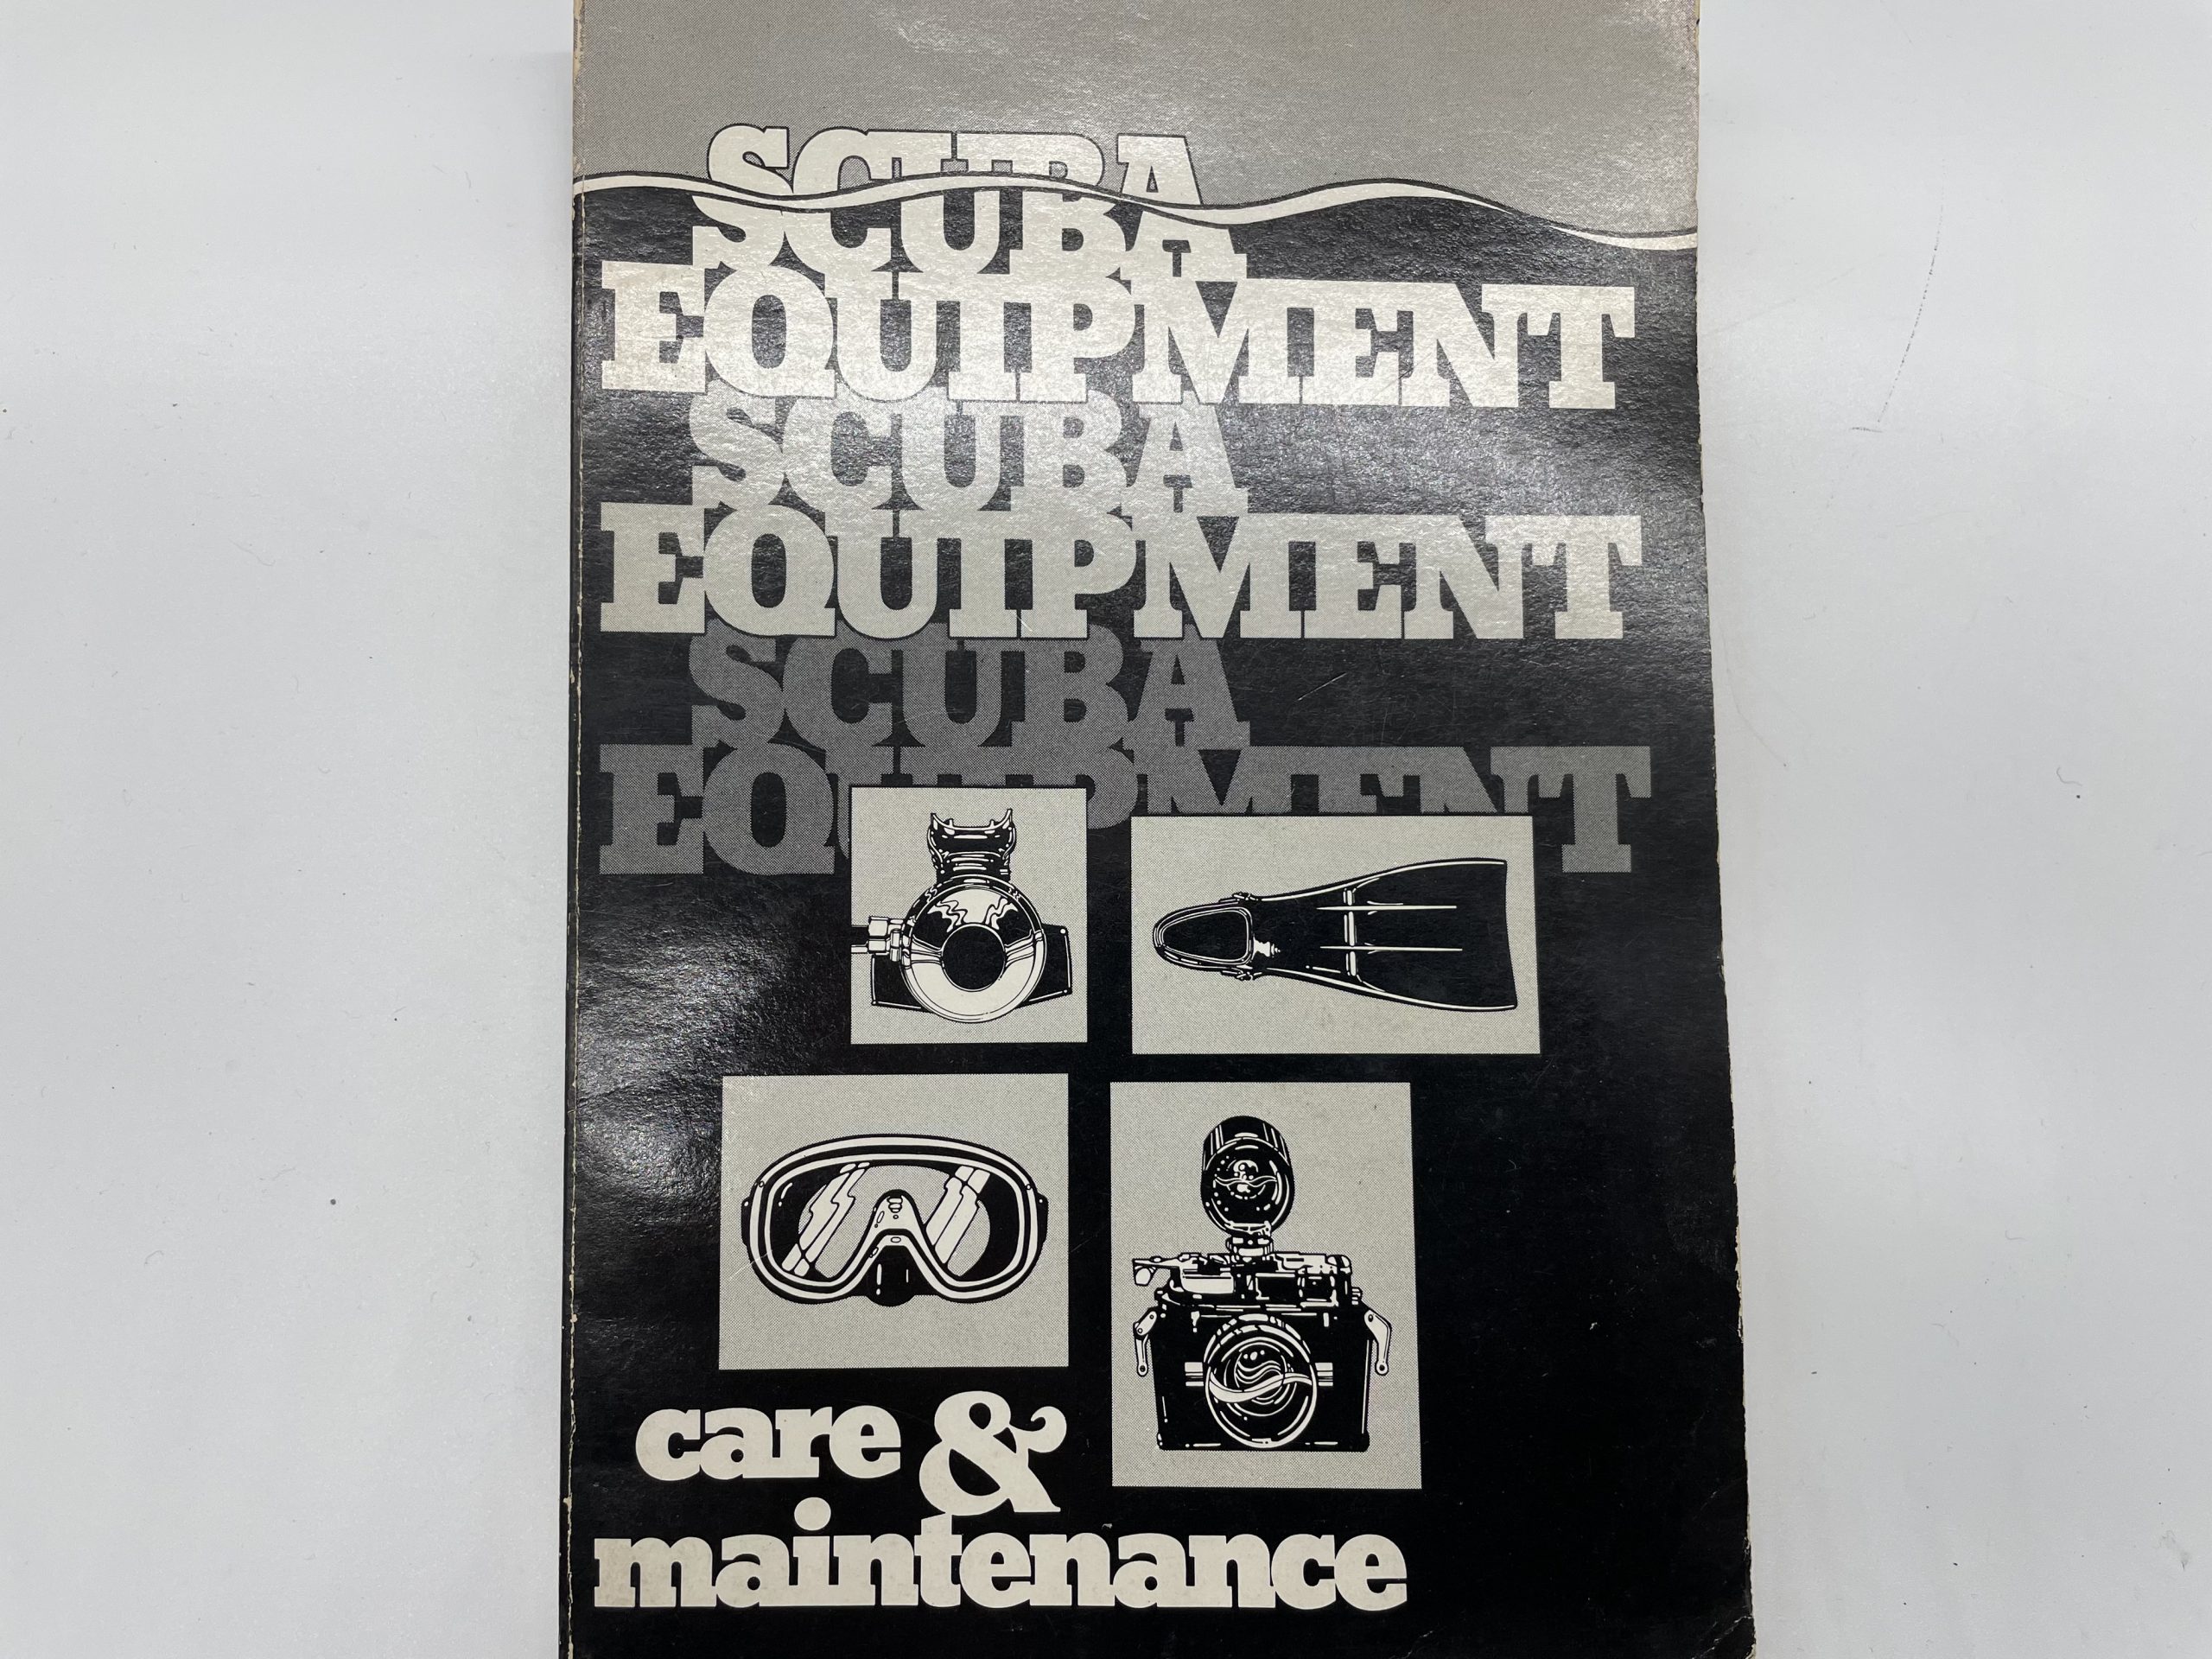 Scuba equipment